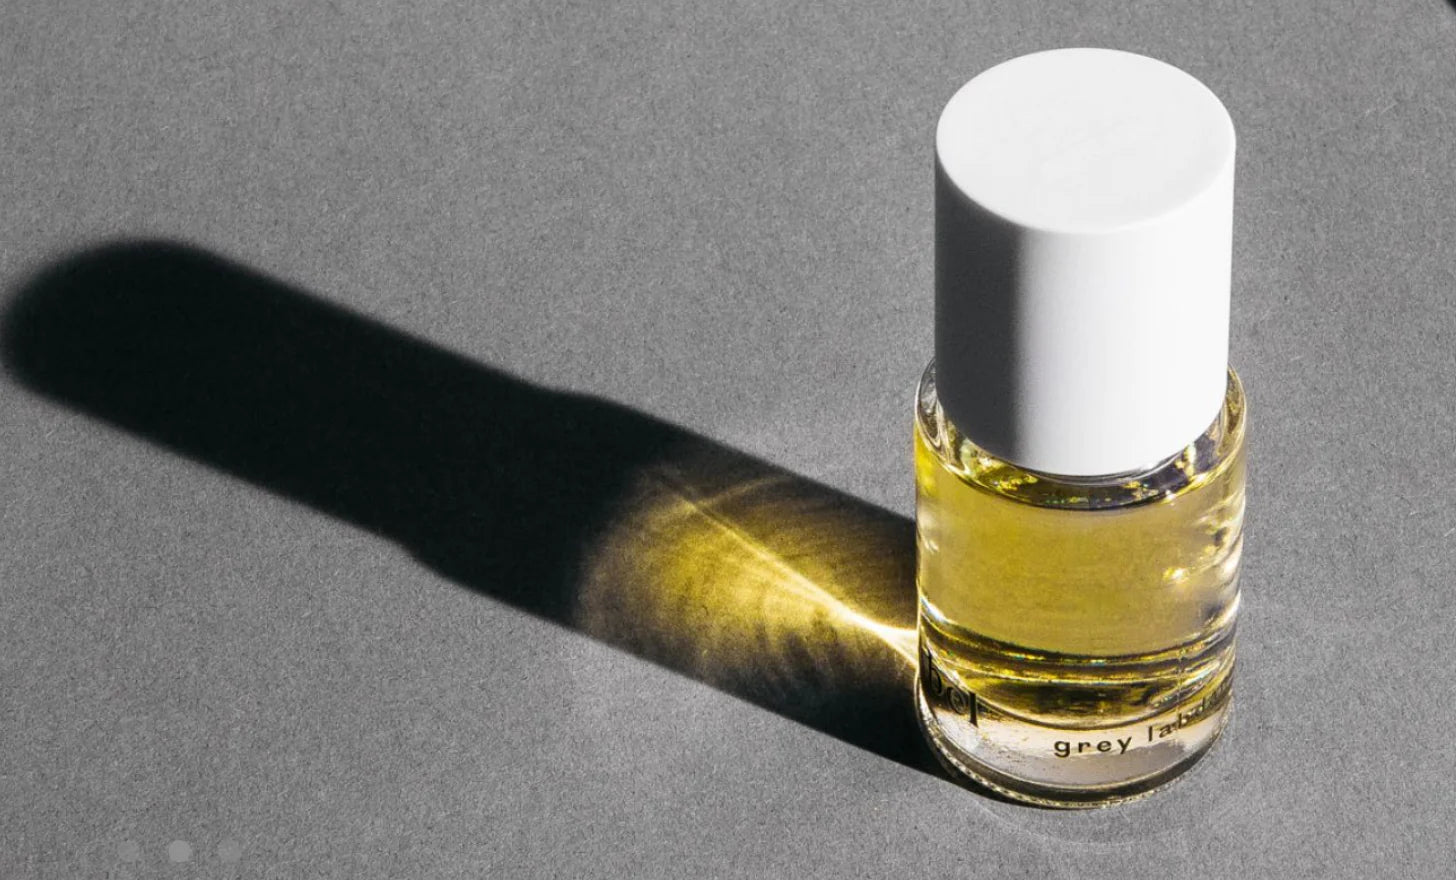 Unisex Natural Perfume | Grey Labdanum | 15ml | by Abel - Lifestory